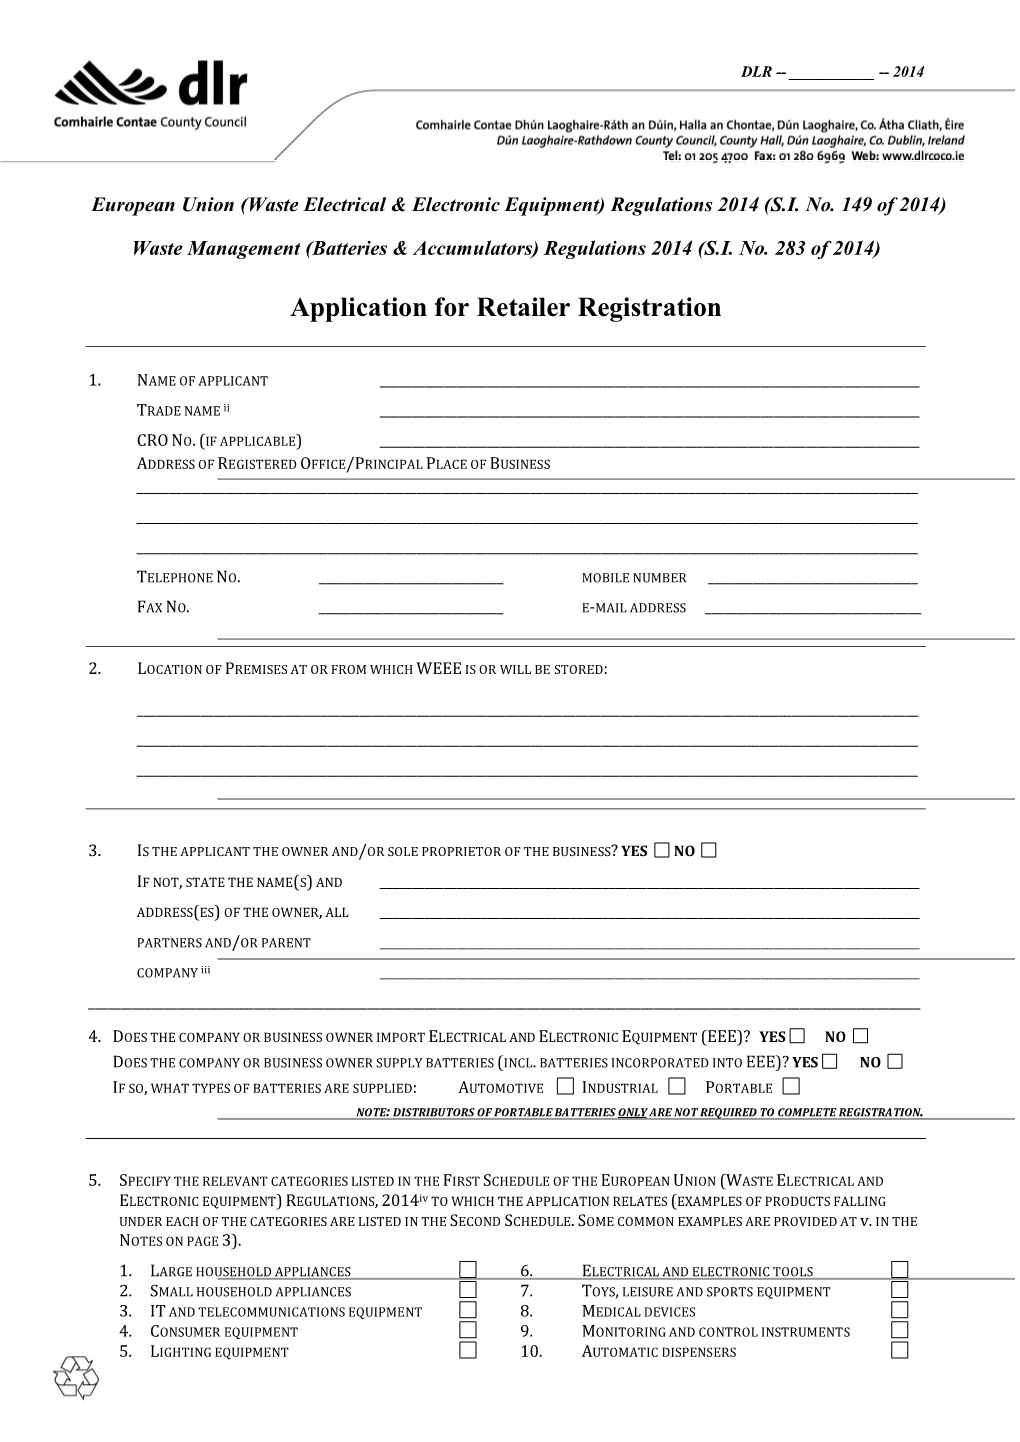 Application for Retailer Registration